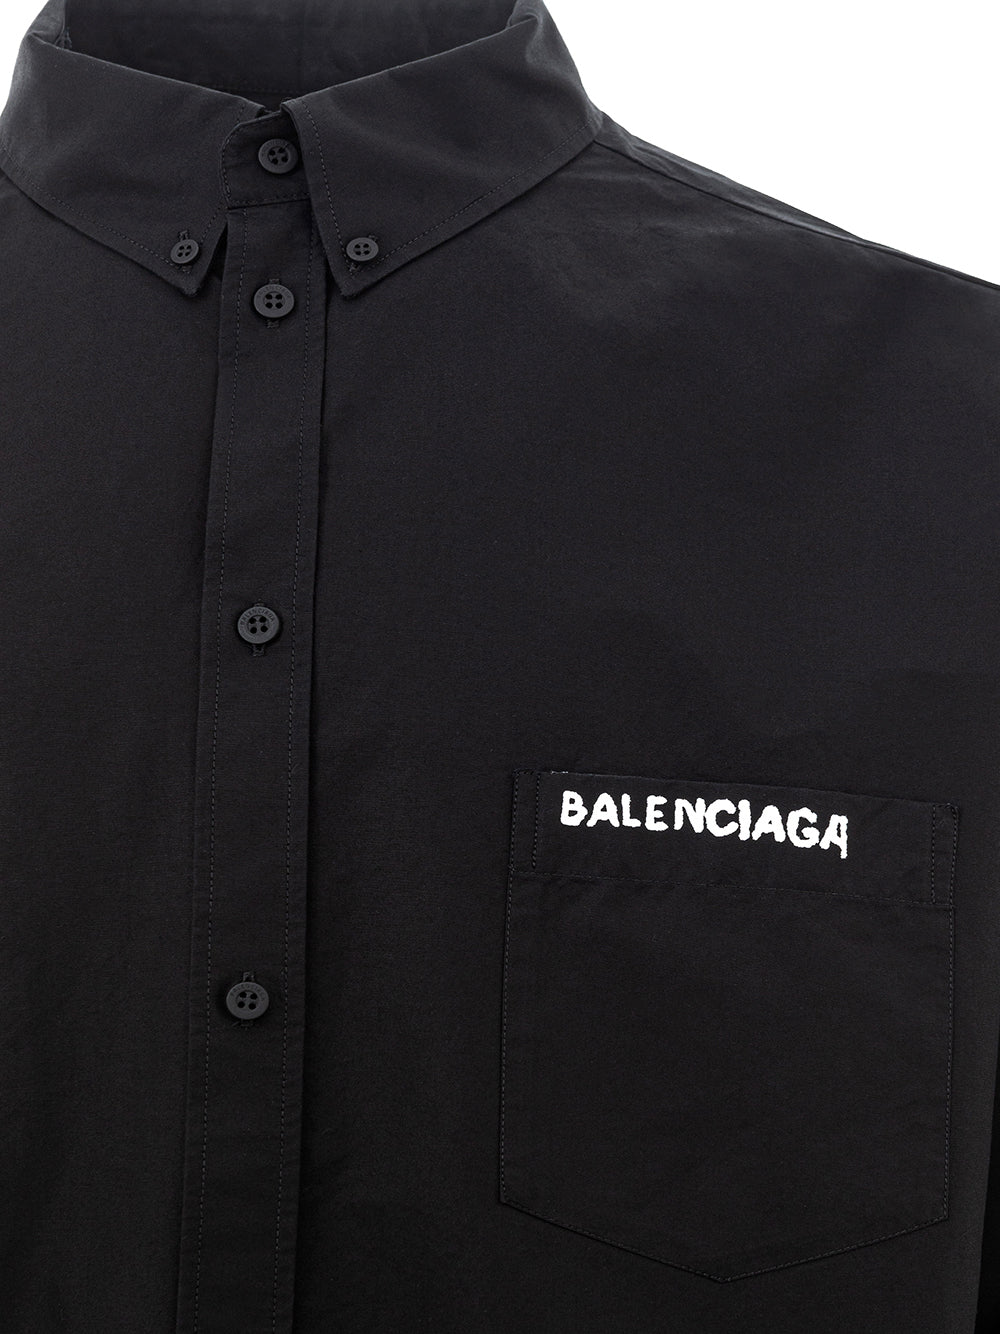 Over Fit Balenciaga black shirt